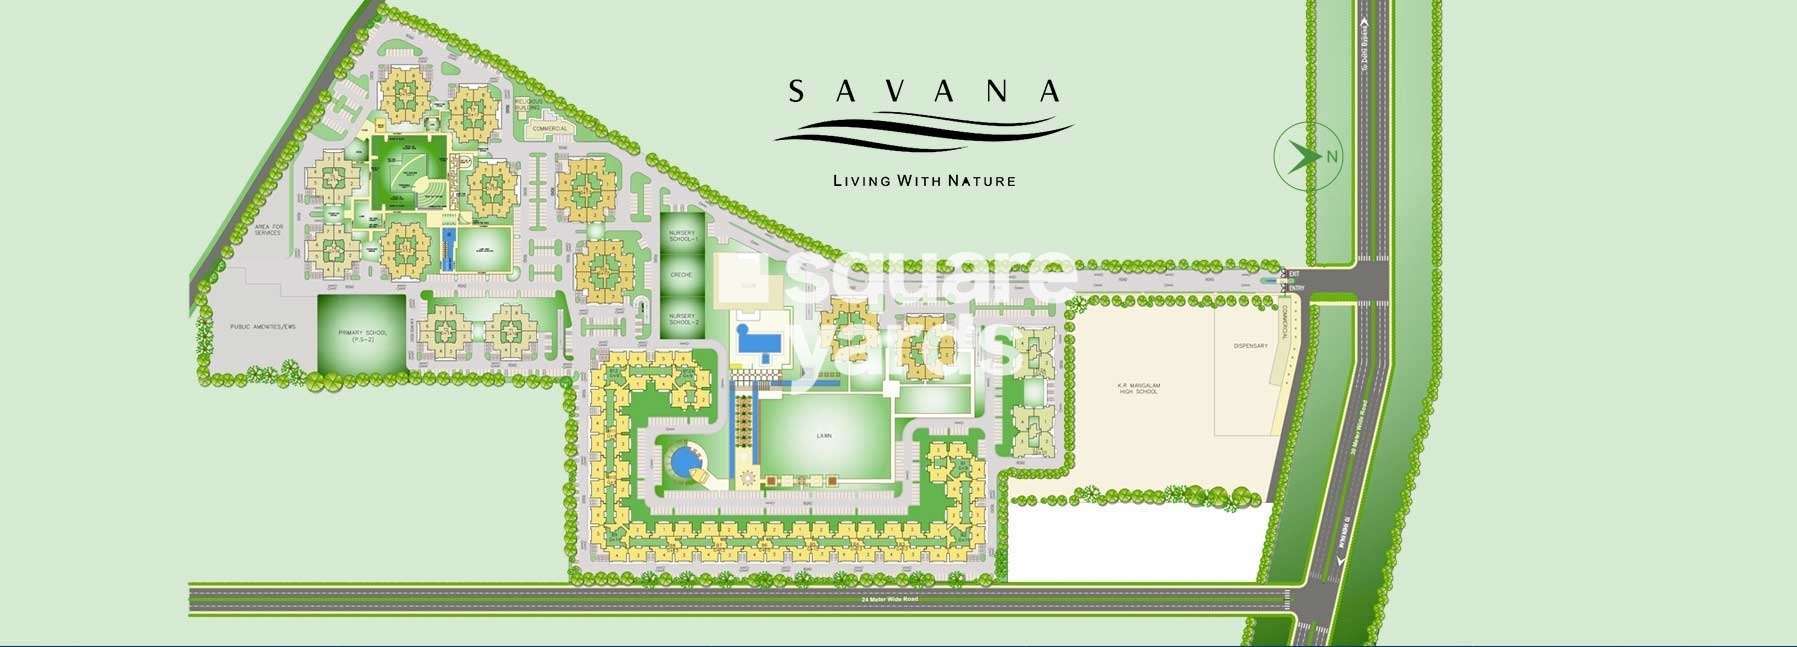 rps savana project master plan image1